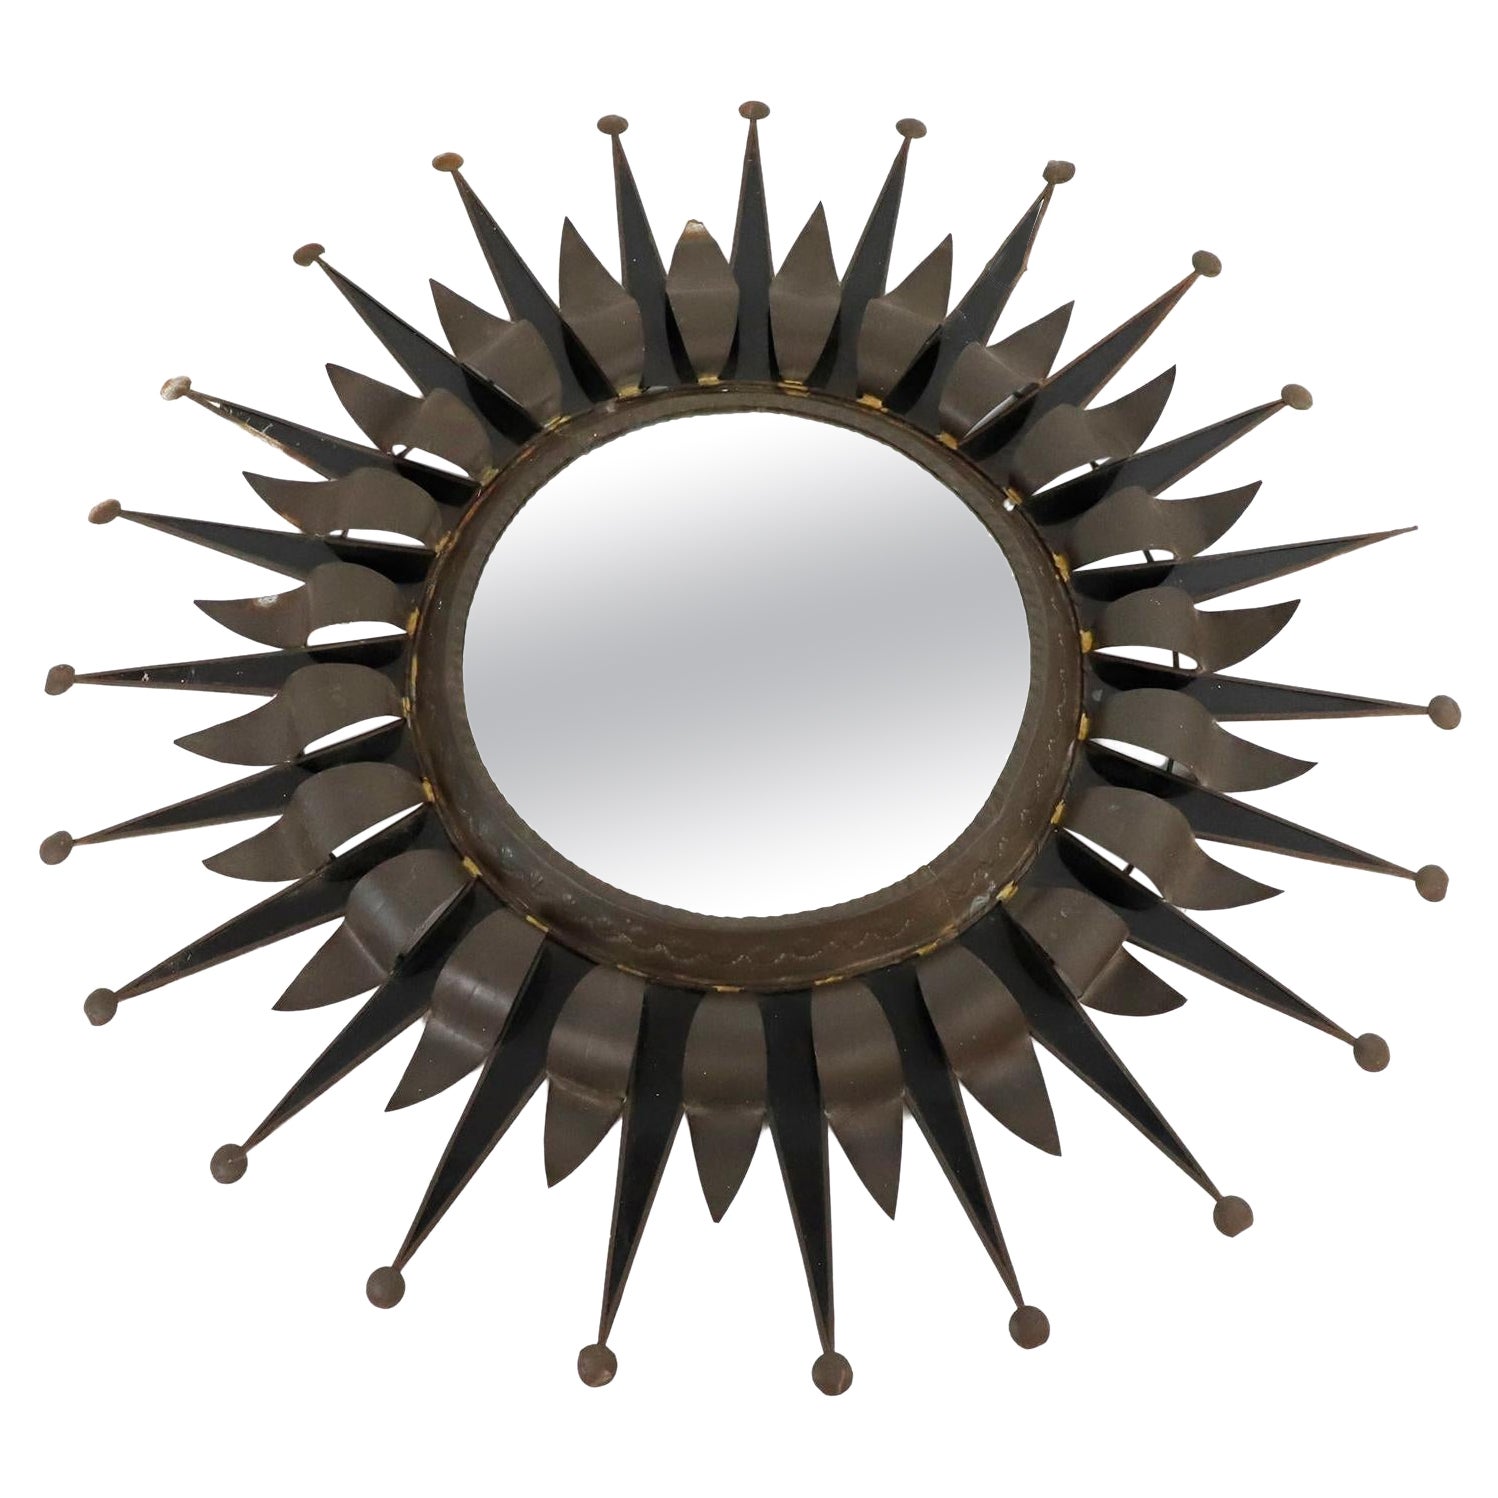 Antique Big Size Mexican Artisanal Sunburst Mirror For Sale